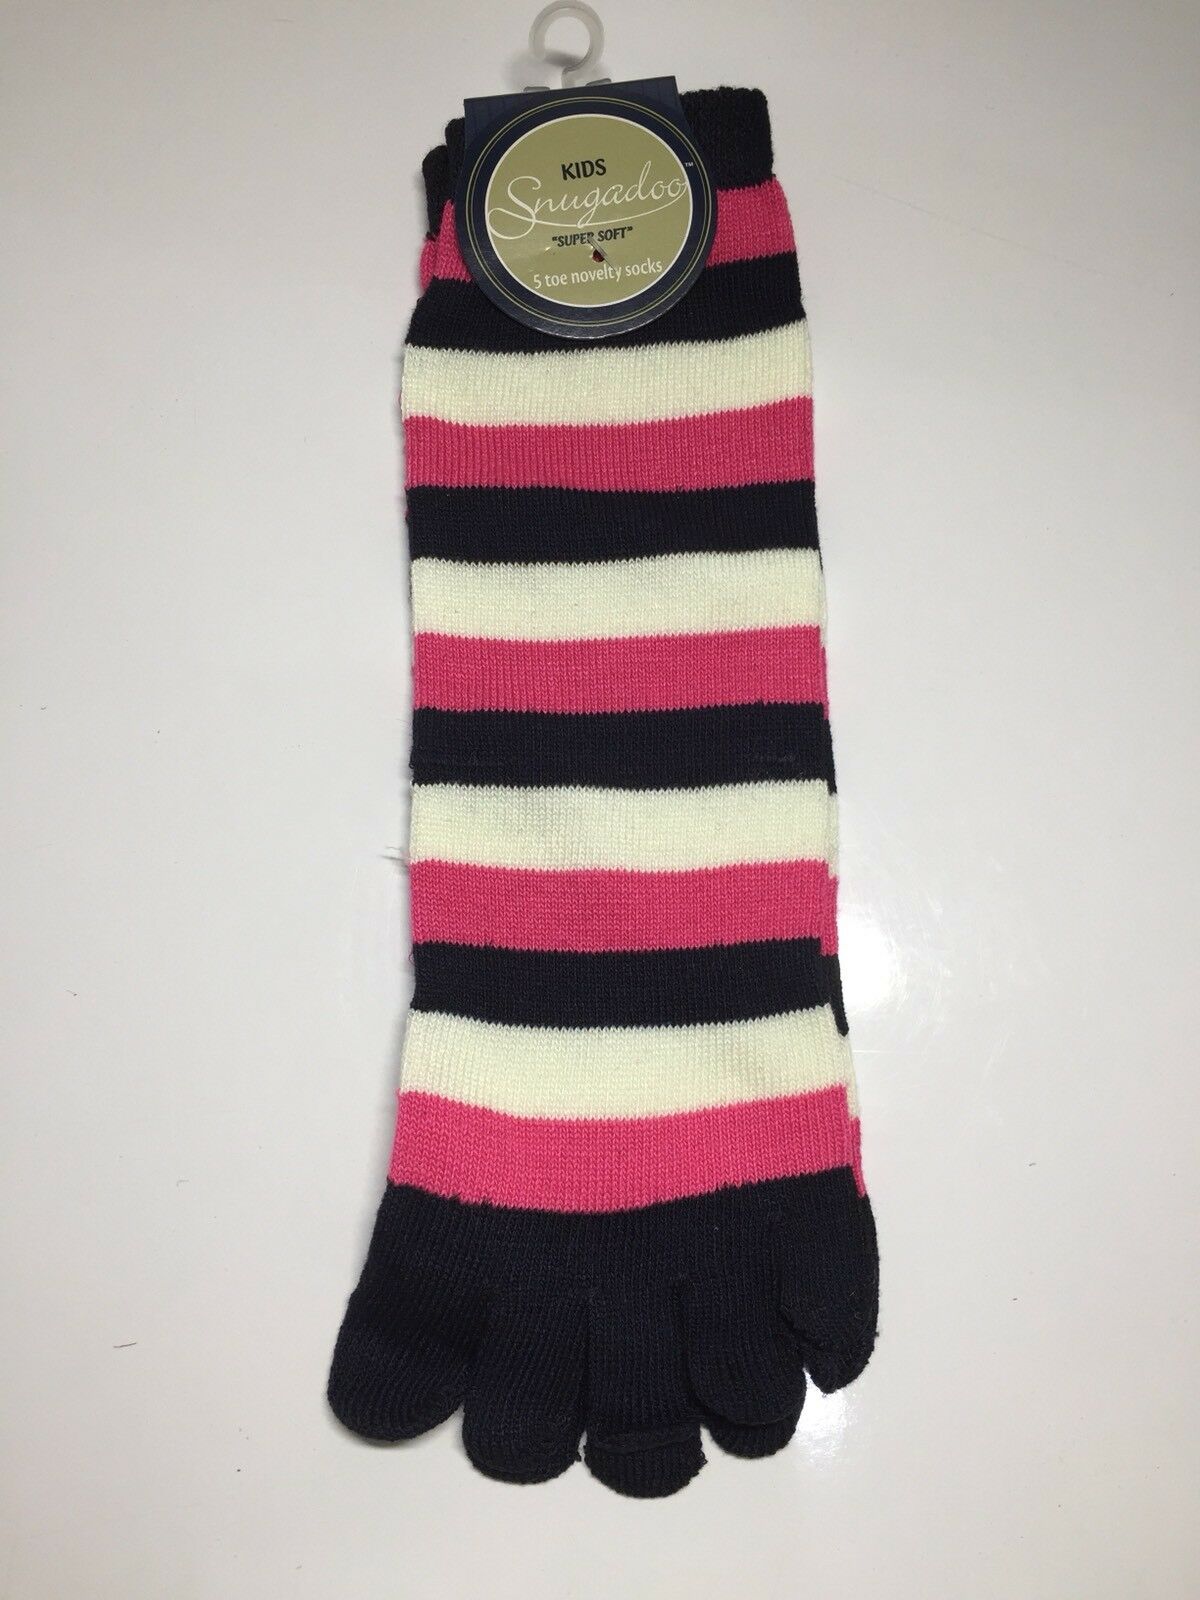 Kids Snugaloo Super Soft 5 Toe Navy White & Pink Novelty Socks RRP 2.99 CLEARANCE XL 1